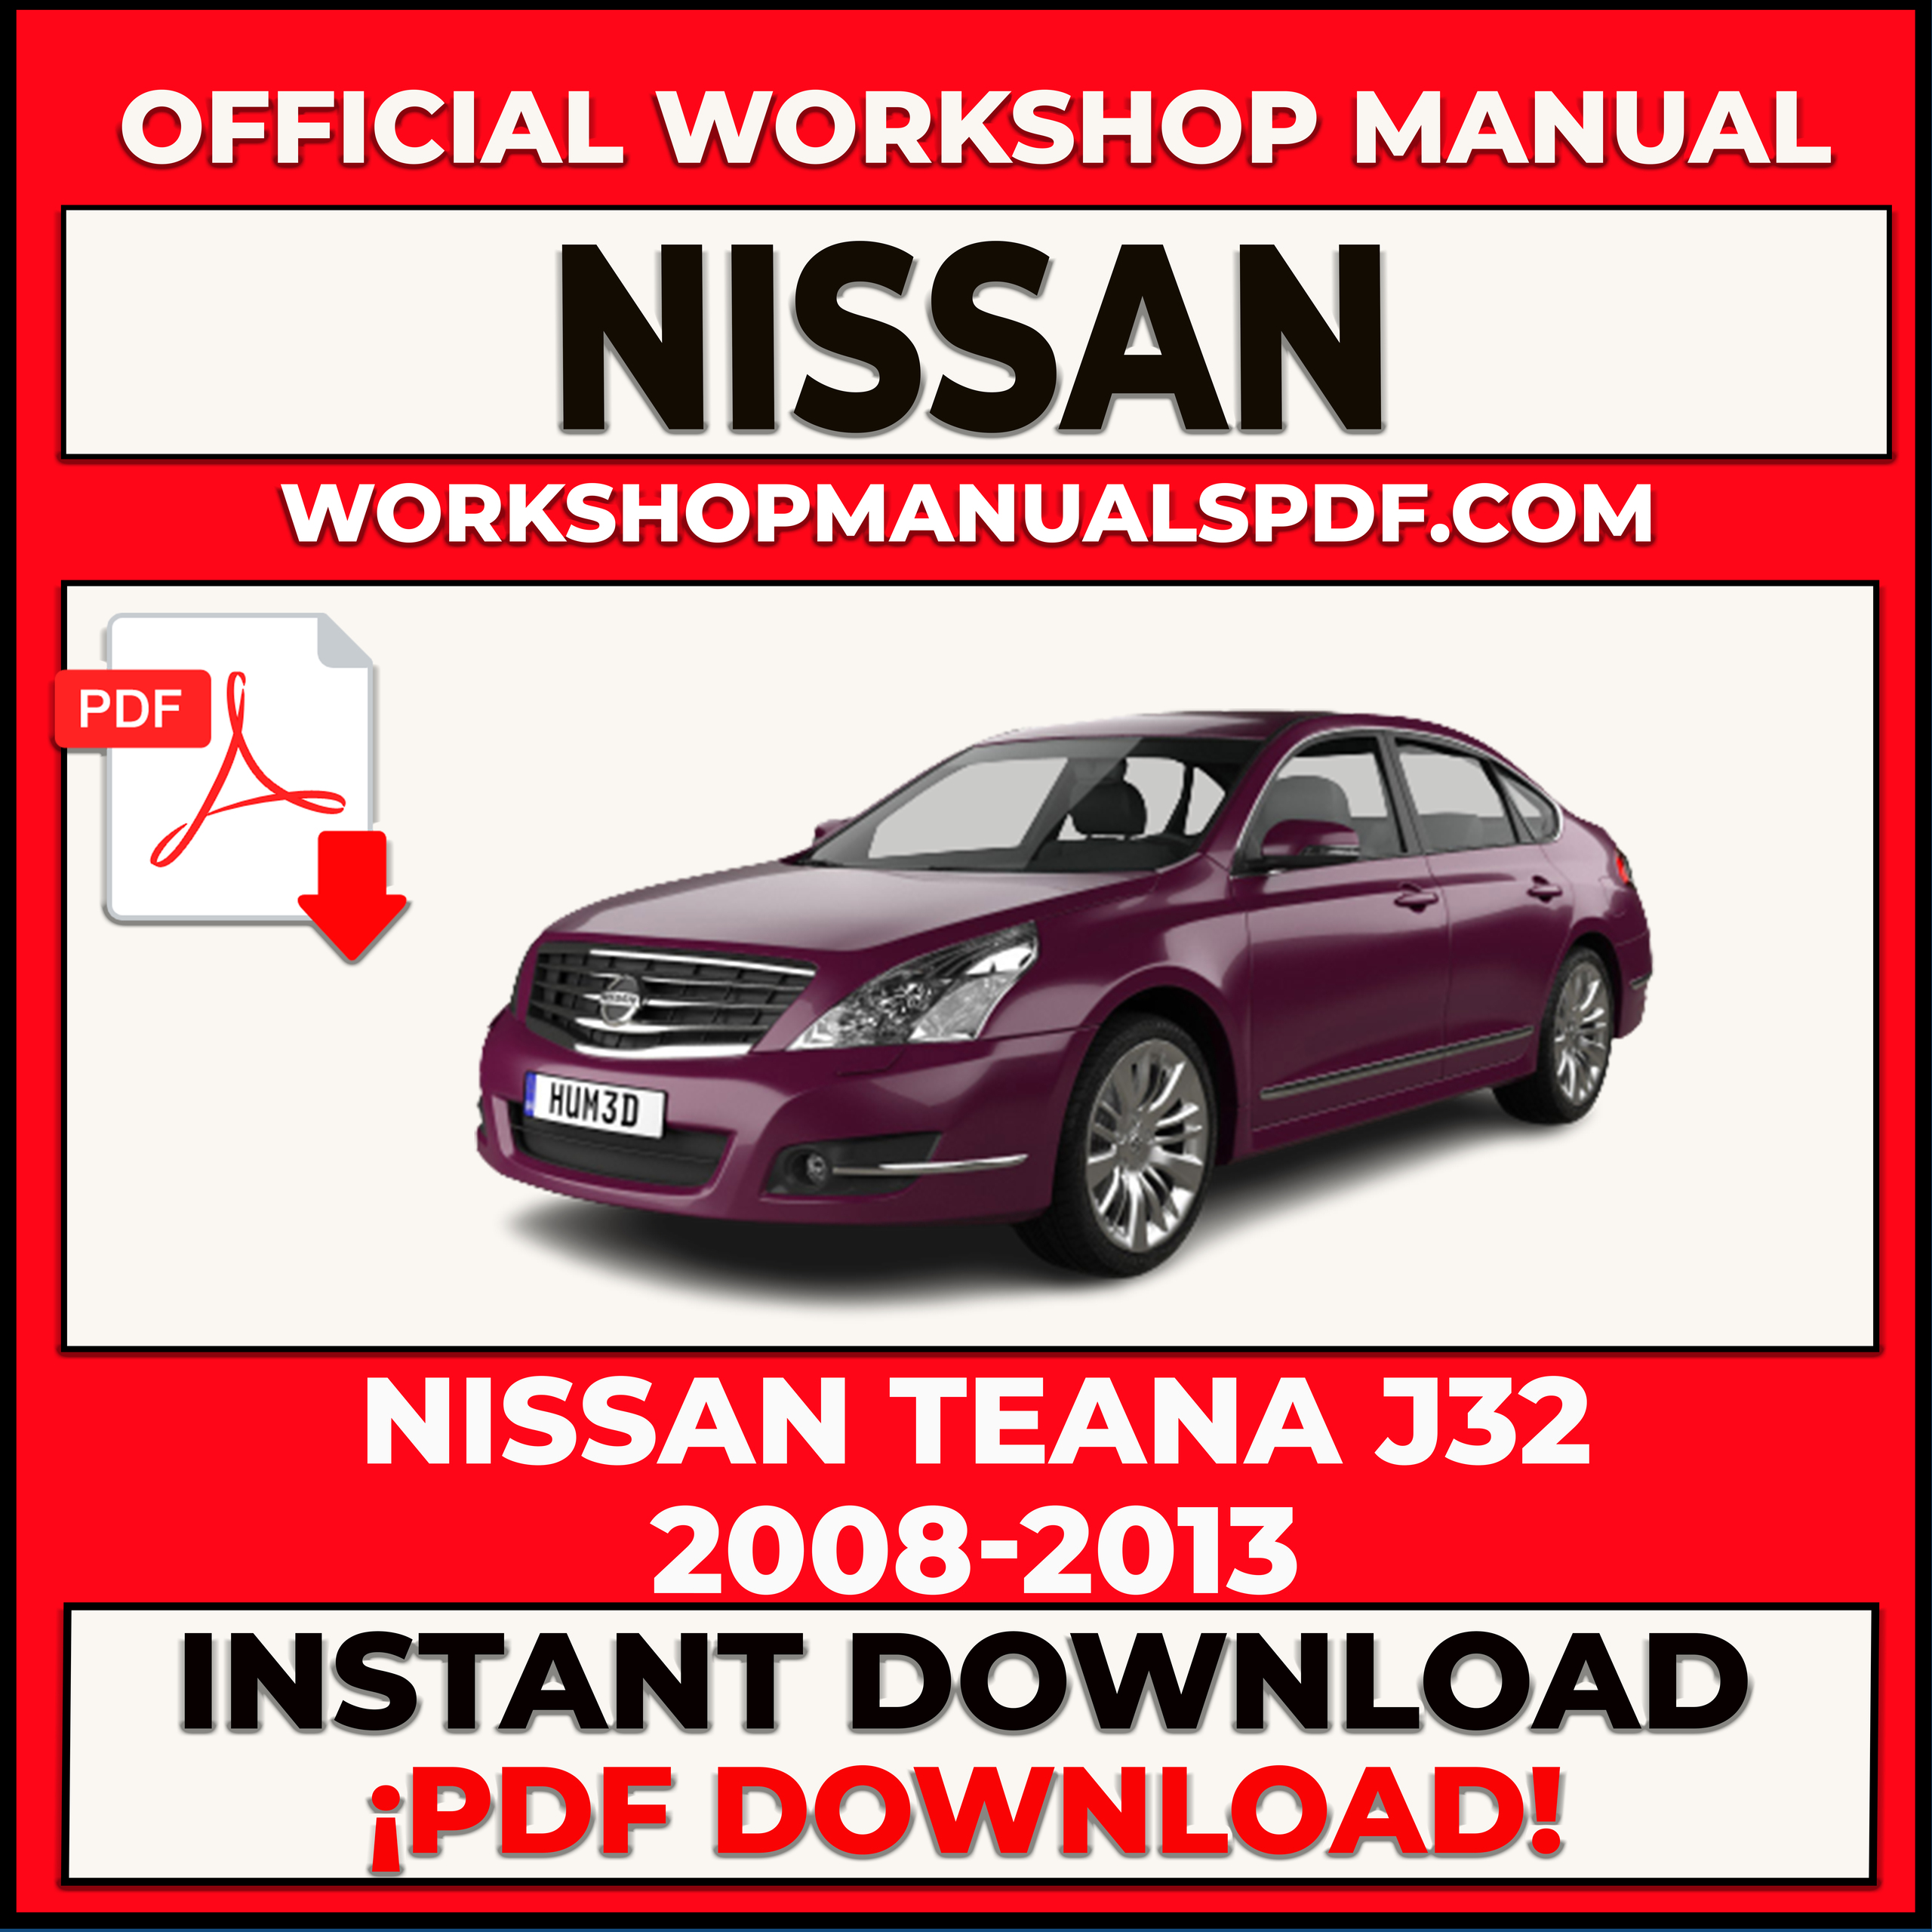 Nissan Teana J32 2008-2013 Workshop Repair Service Manual PDF